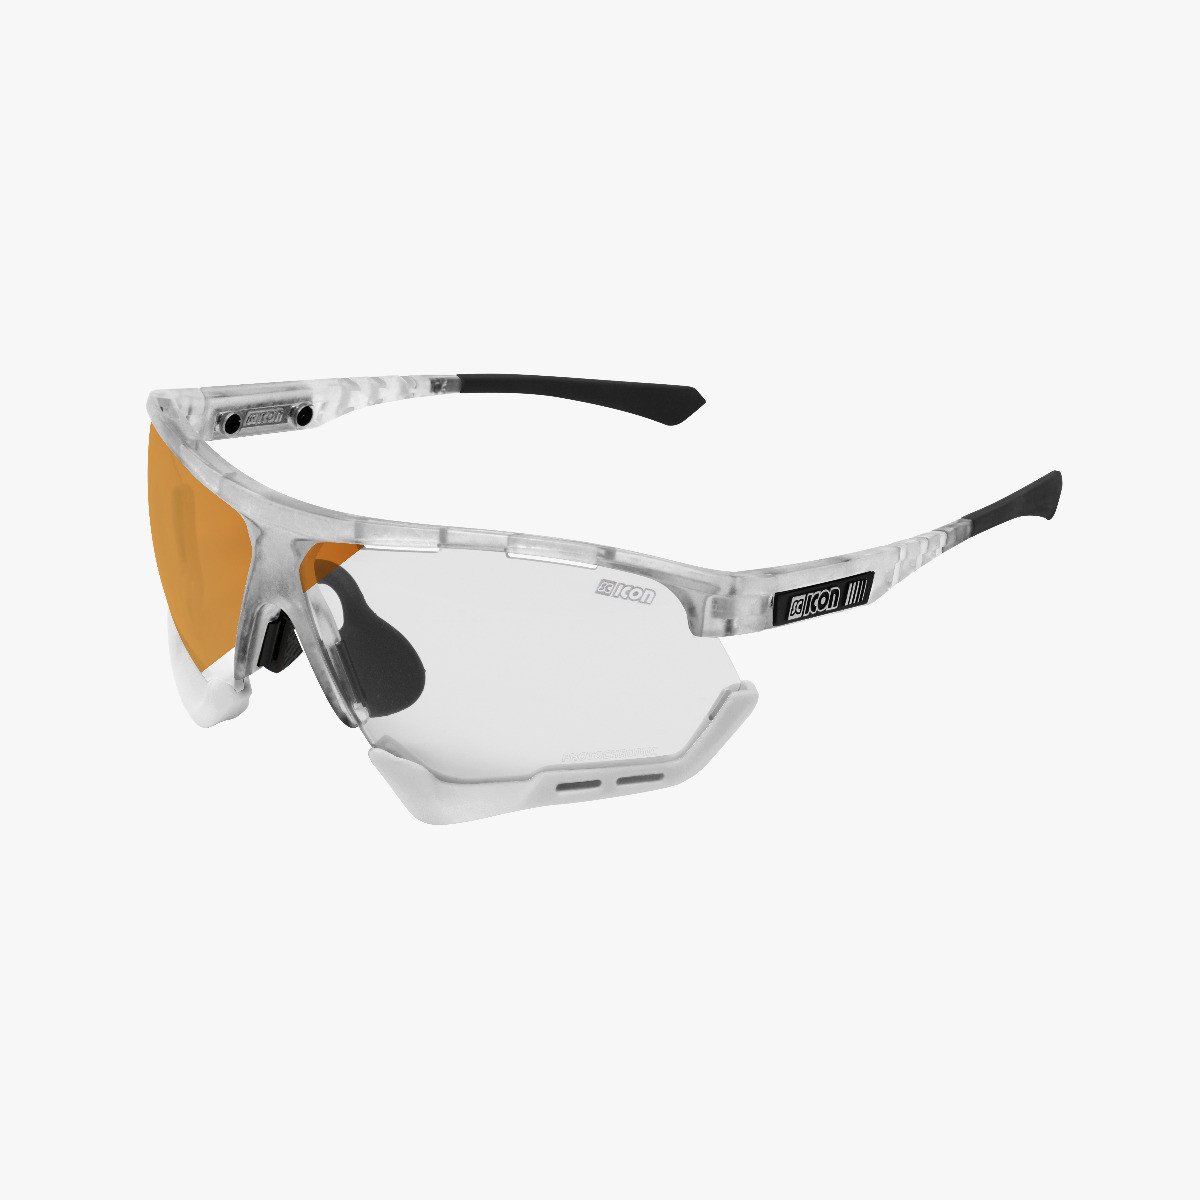 Aerocomfort cycling sunglasses scnxt photochromic frozen frame bronze lenses EY19170501
